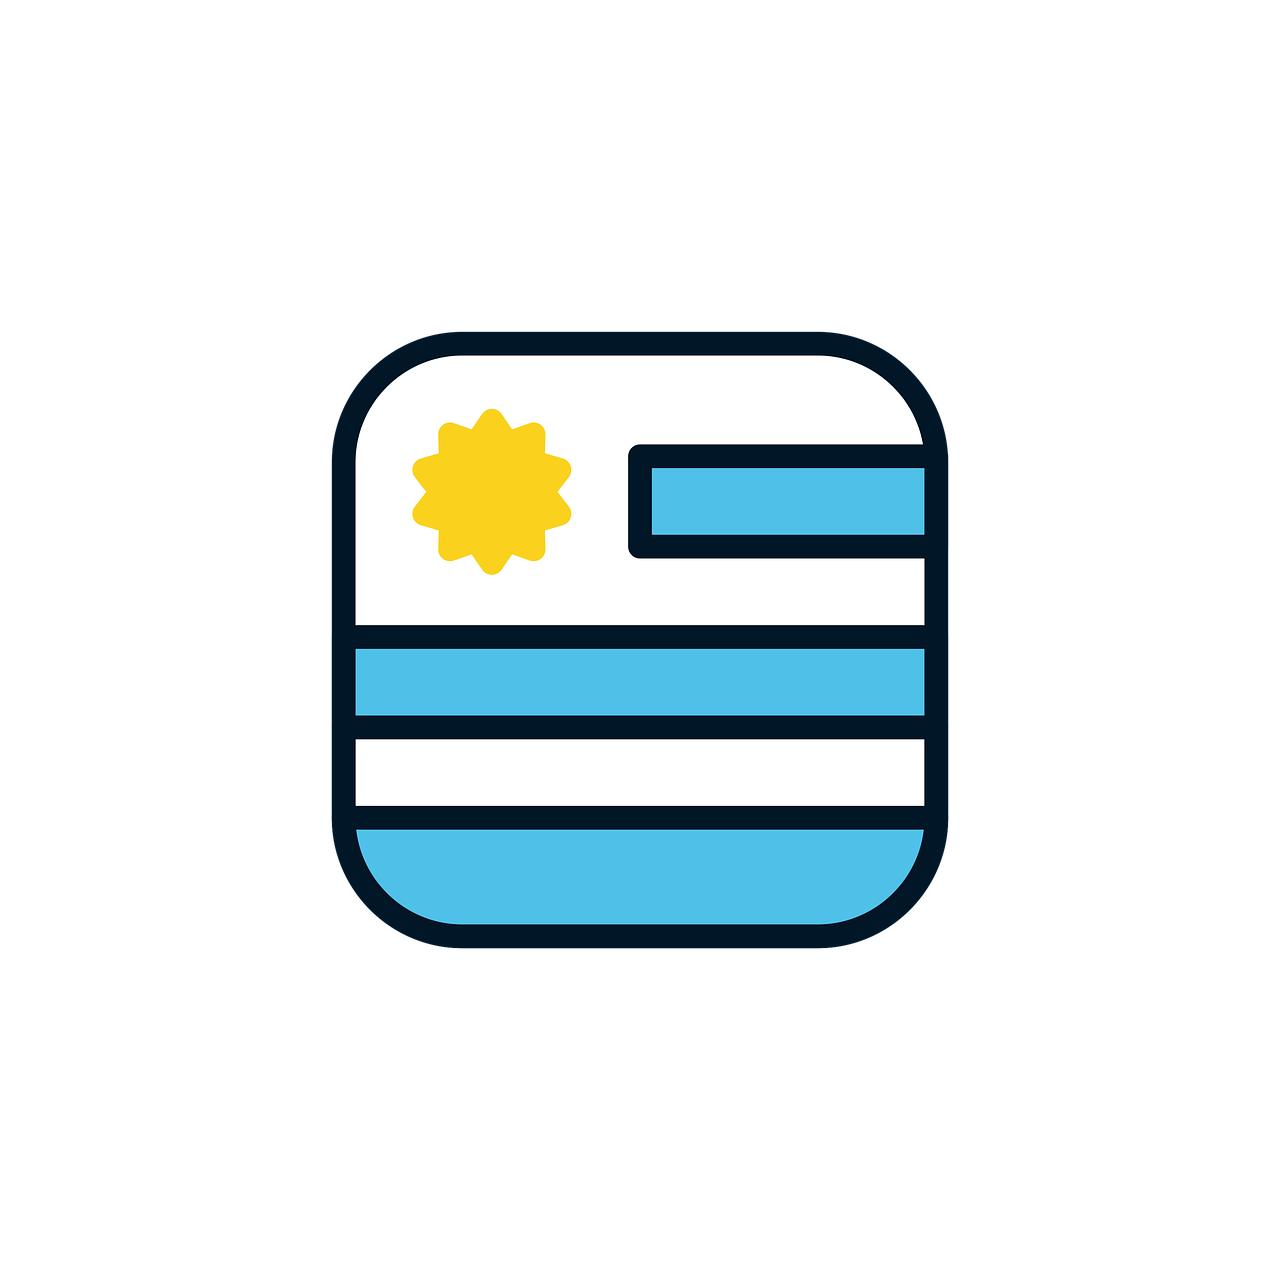 uruguay  uruguay icon  uruguay flag free photo